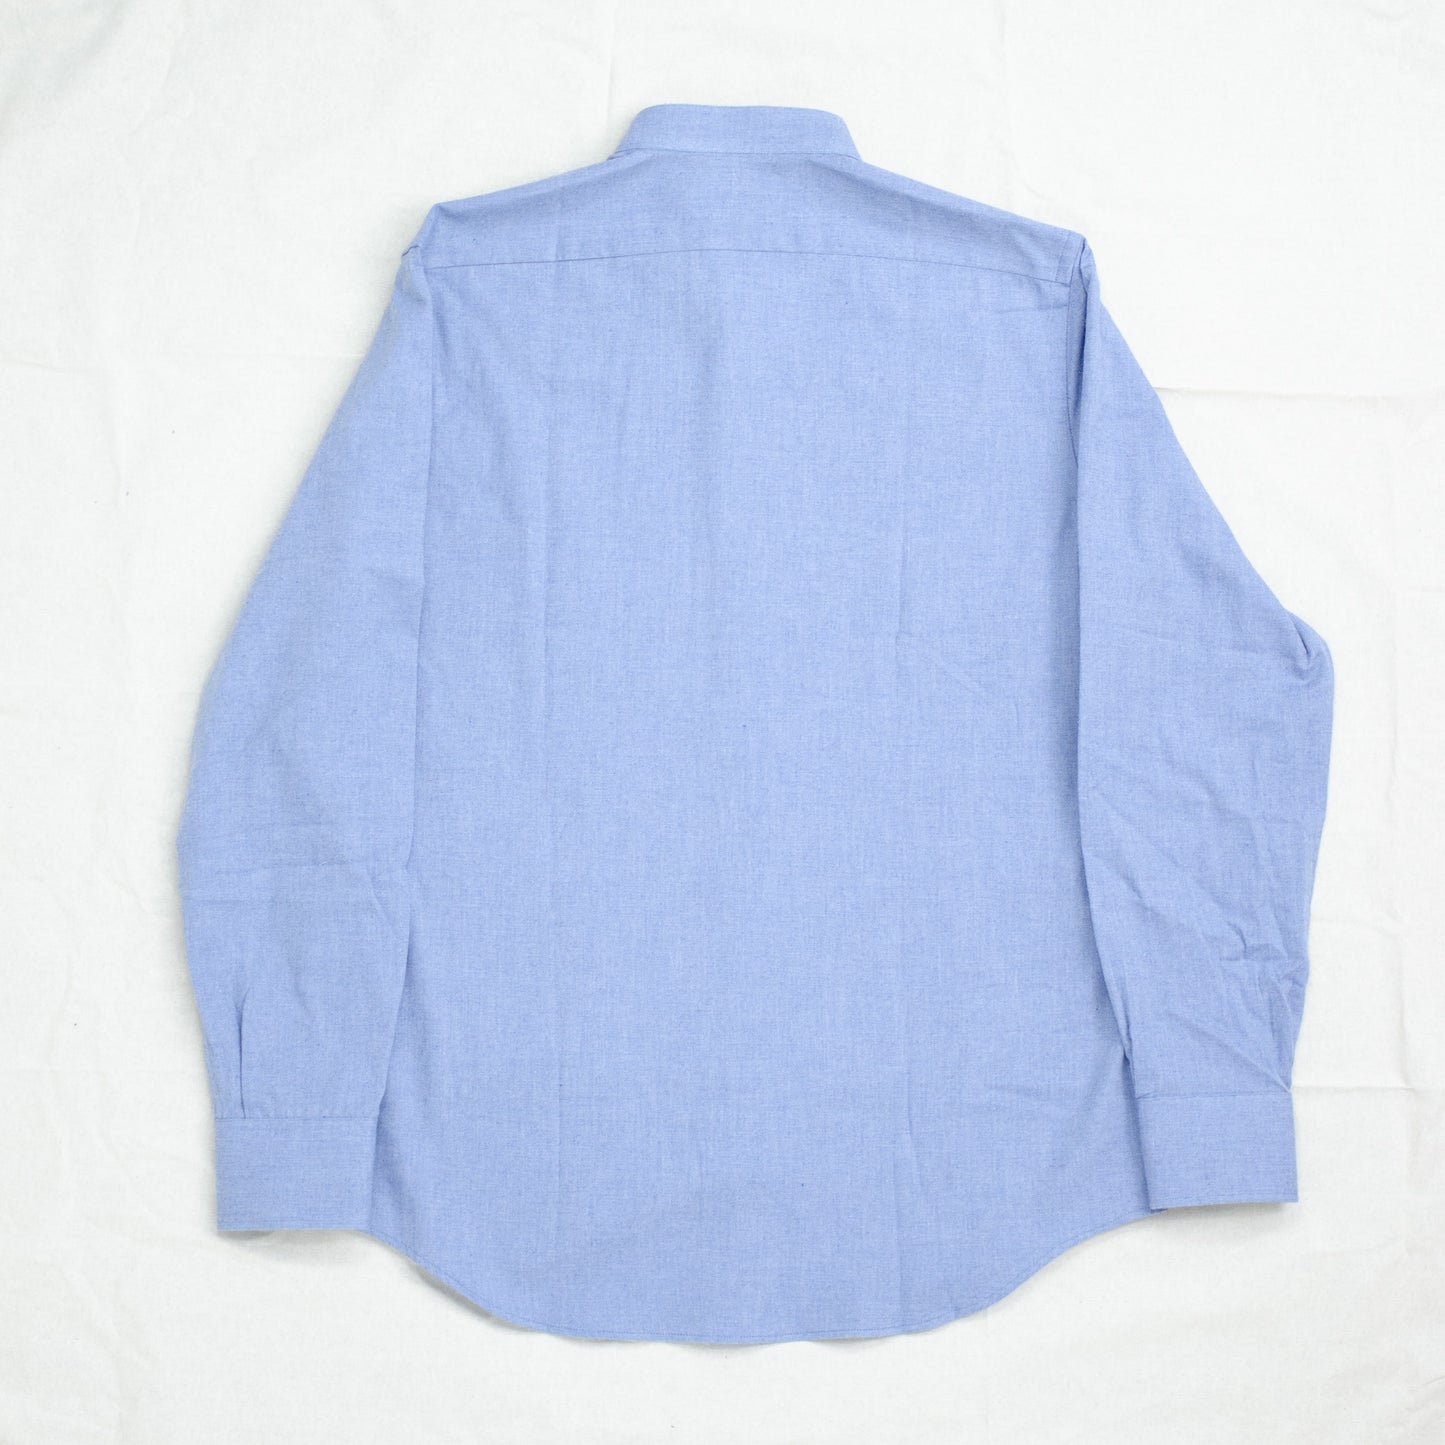 Brushed Cotton Shirt - Mid Blue